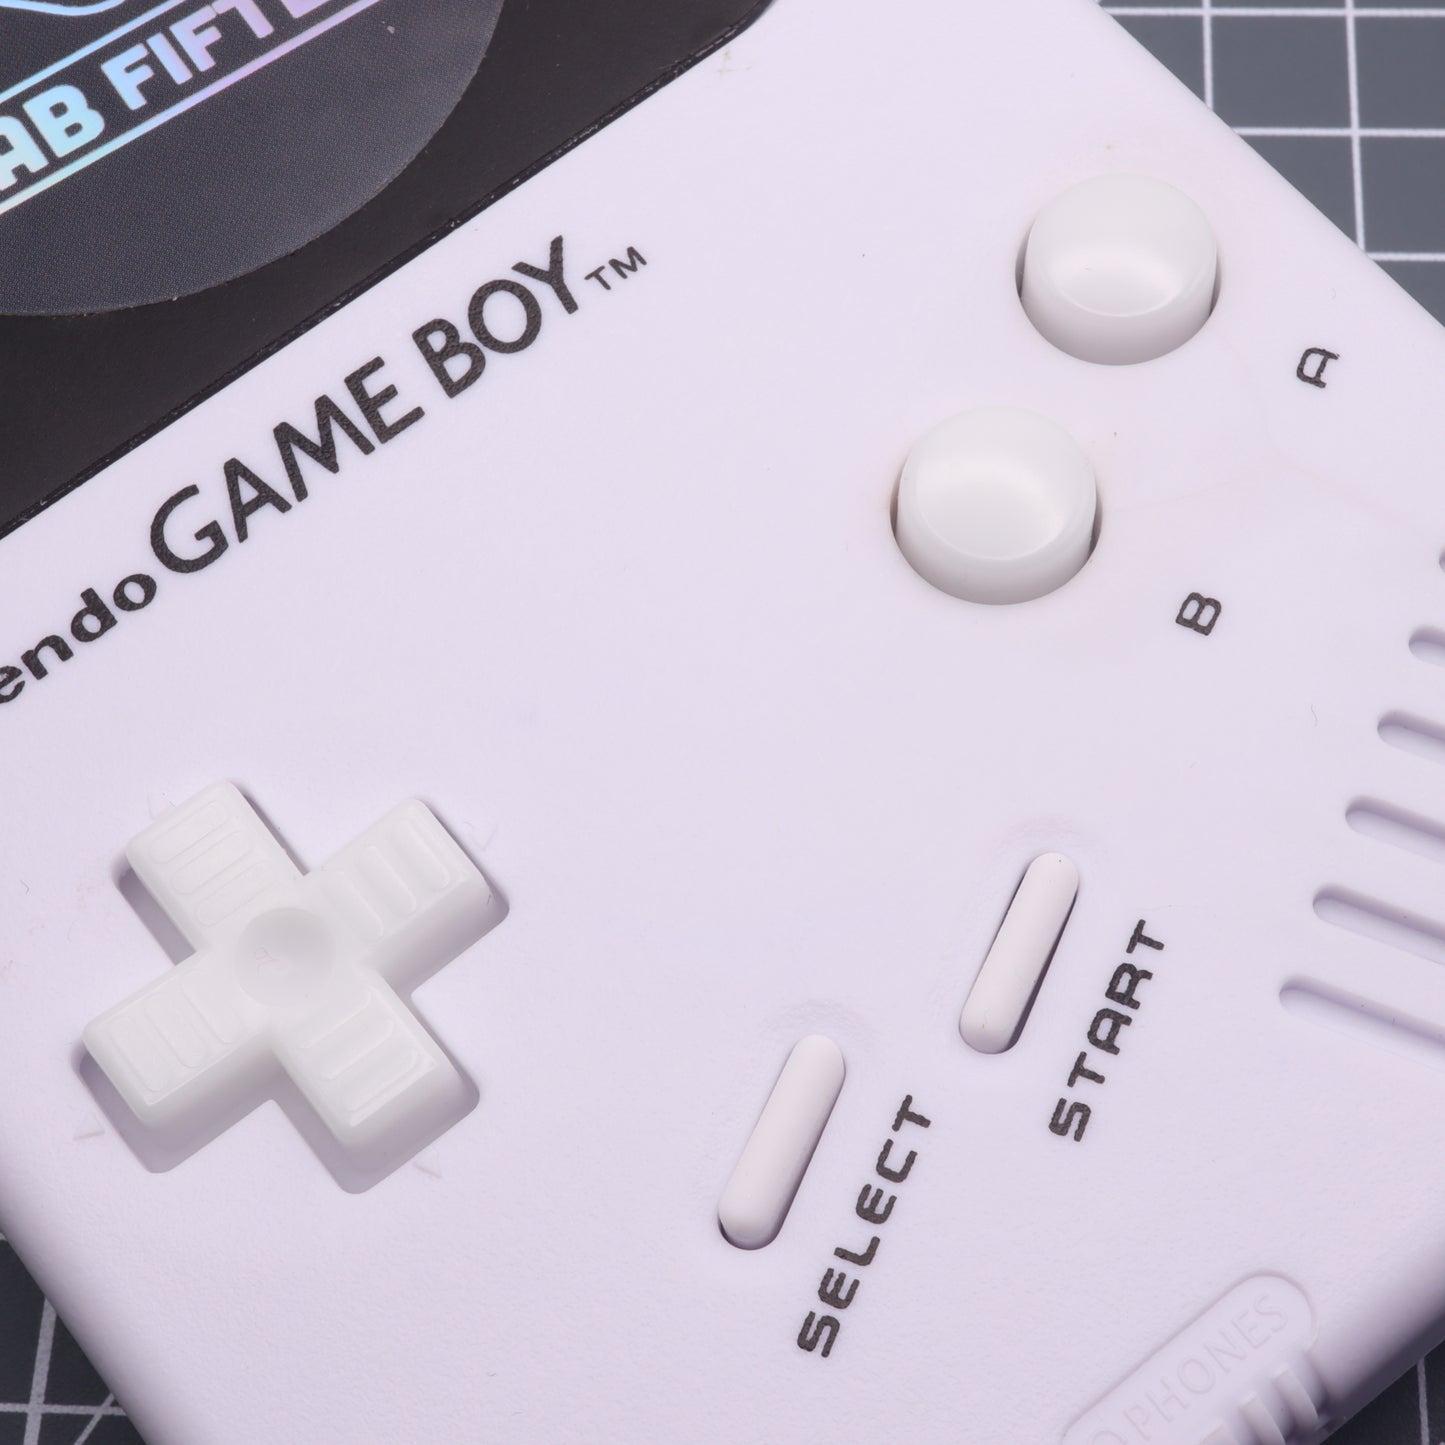 Game Boy DMG - Custom Button - GITD - Aqua